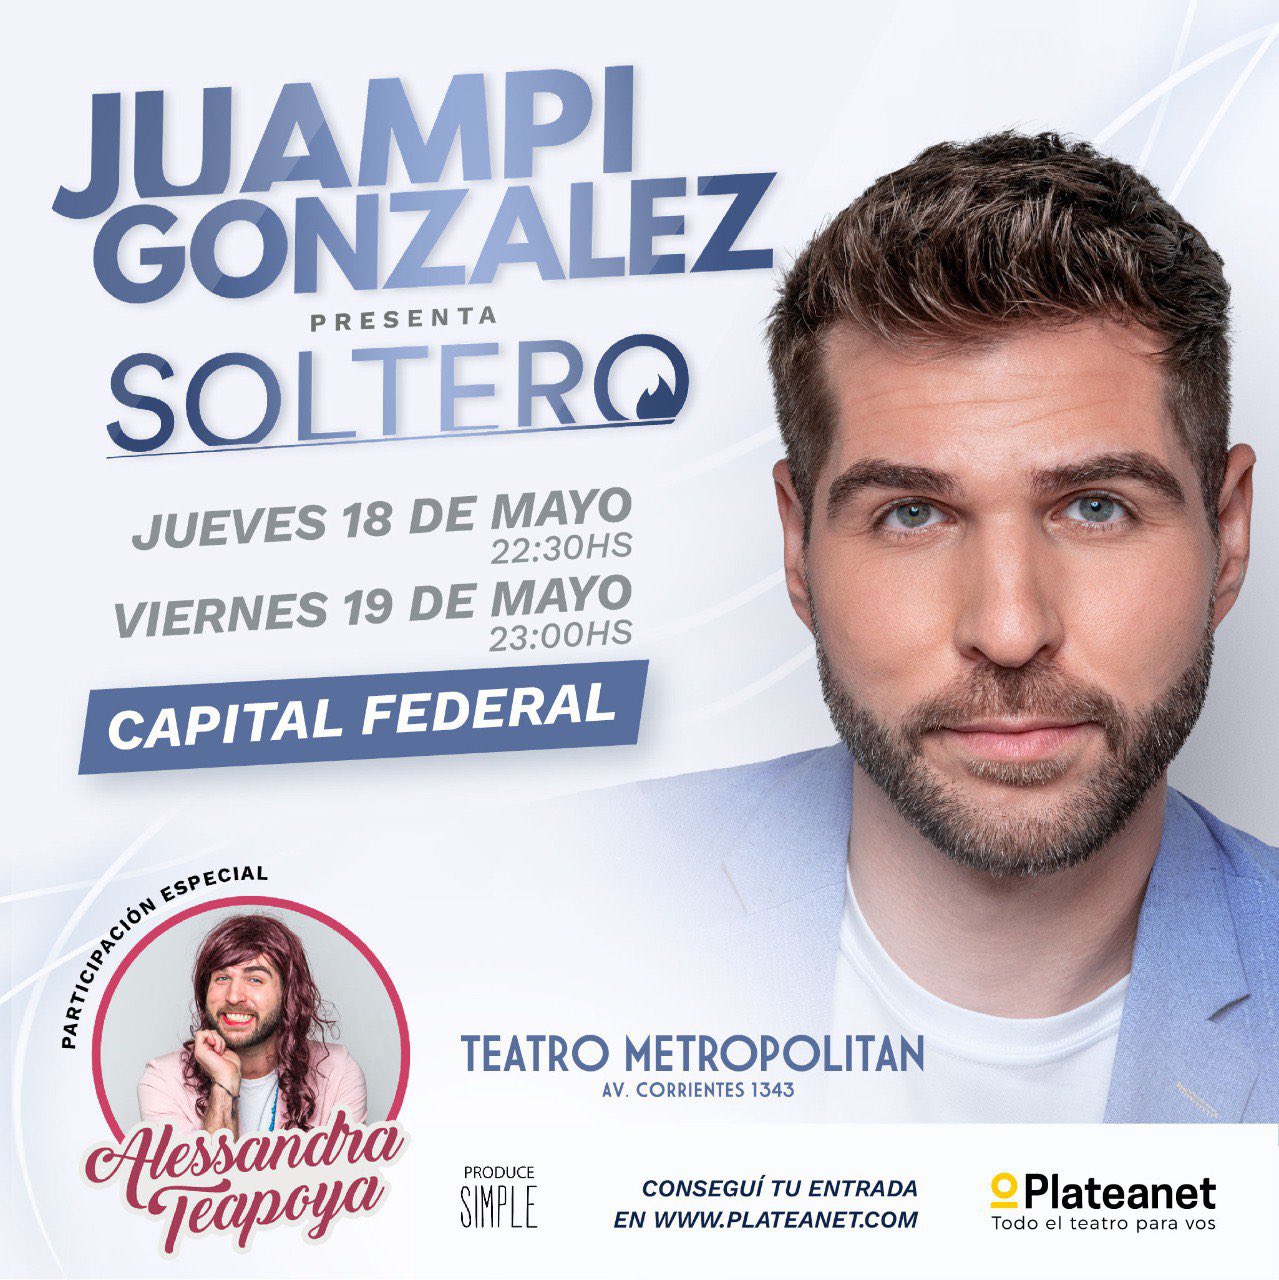 Juampi González, jueves y viernes en elMetropolitan 